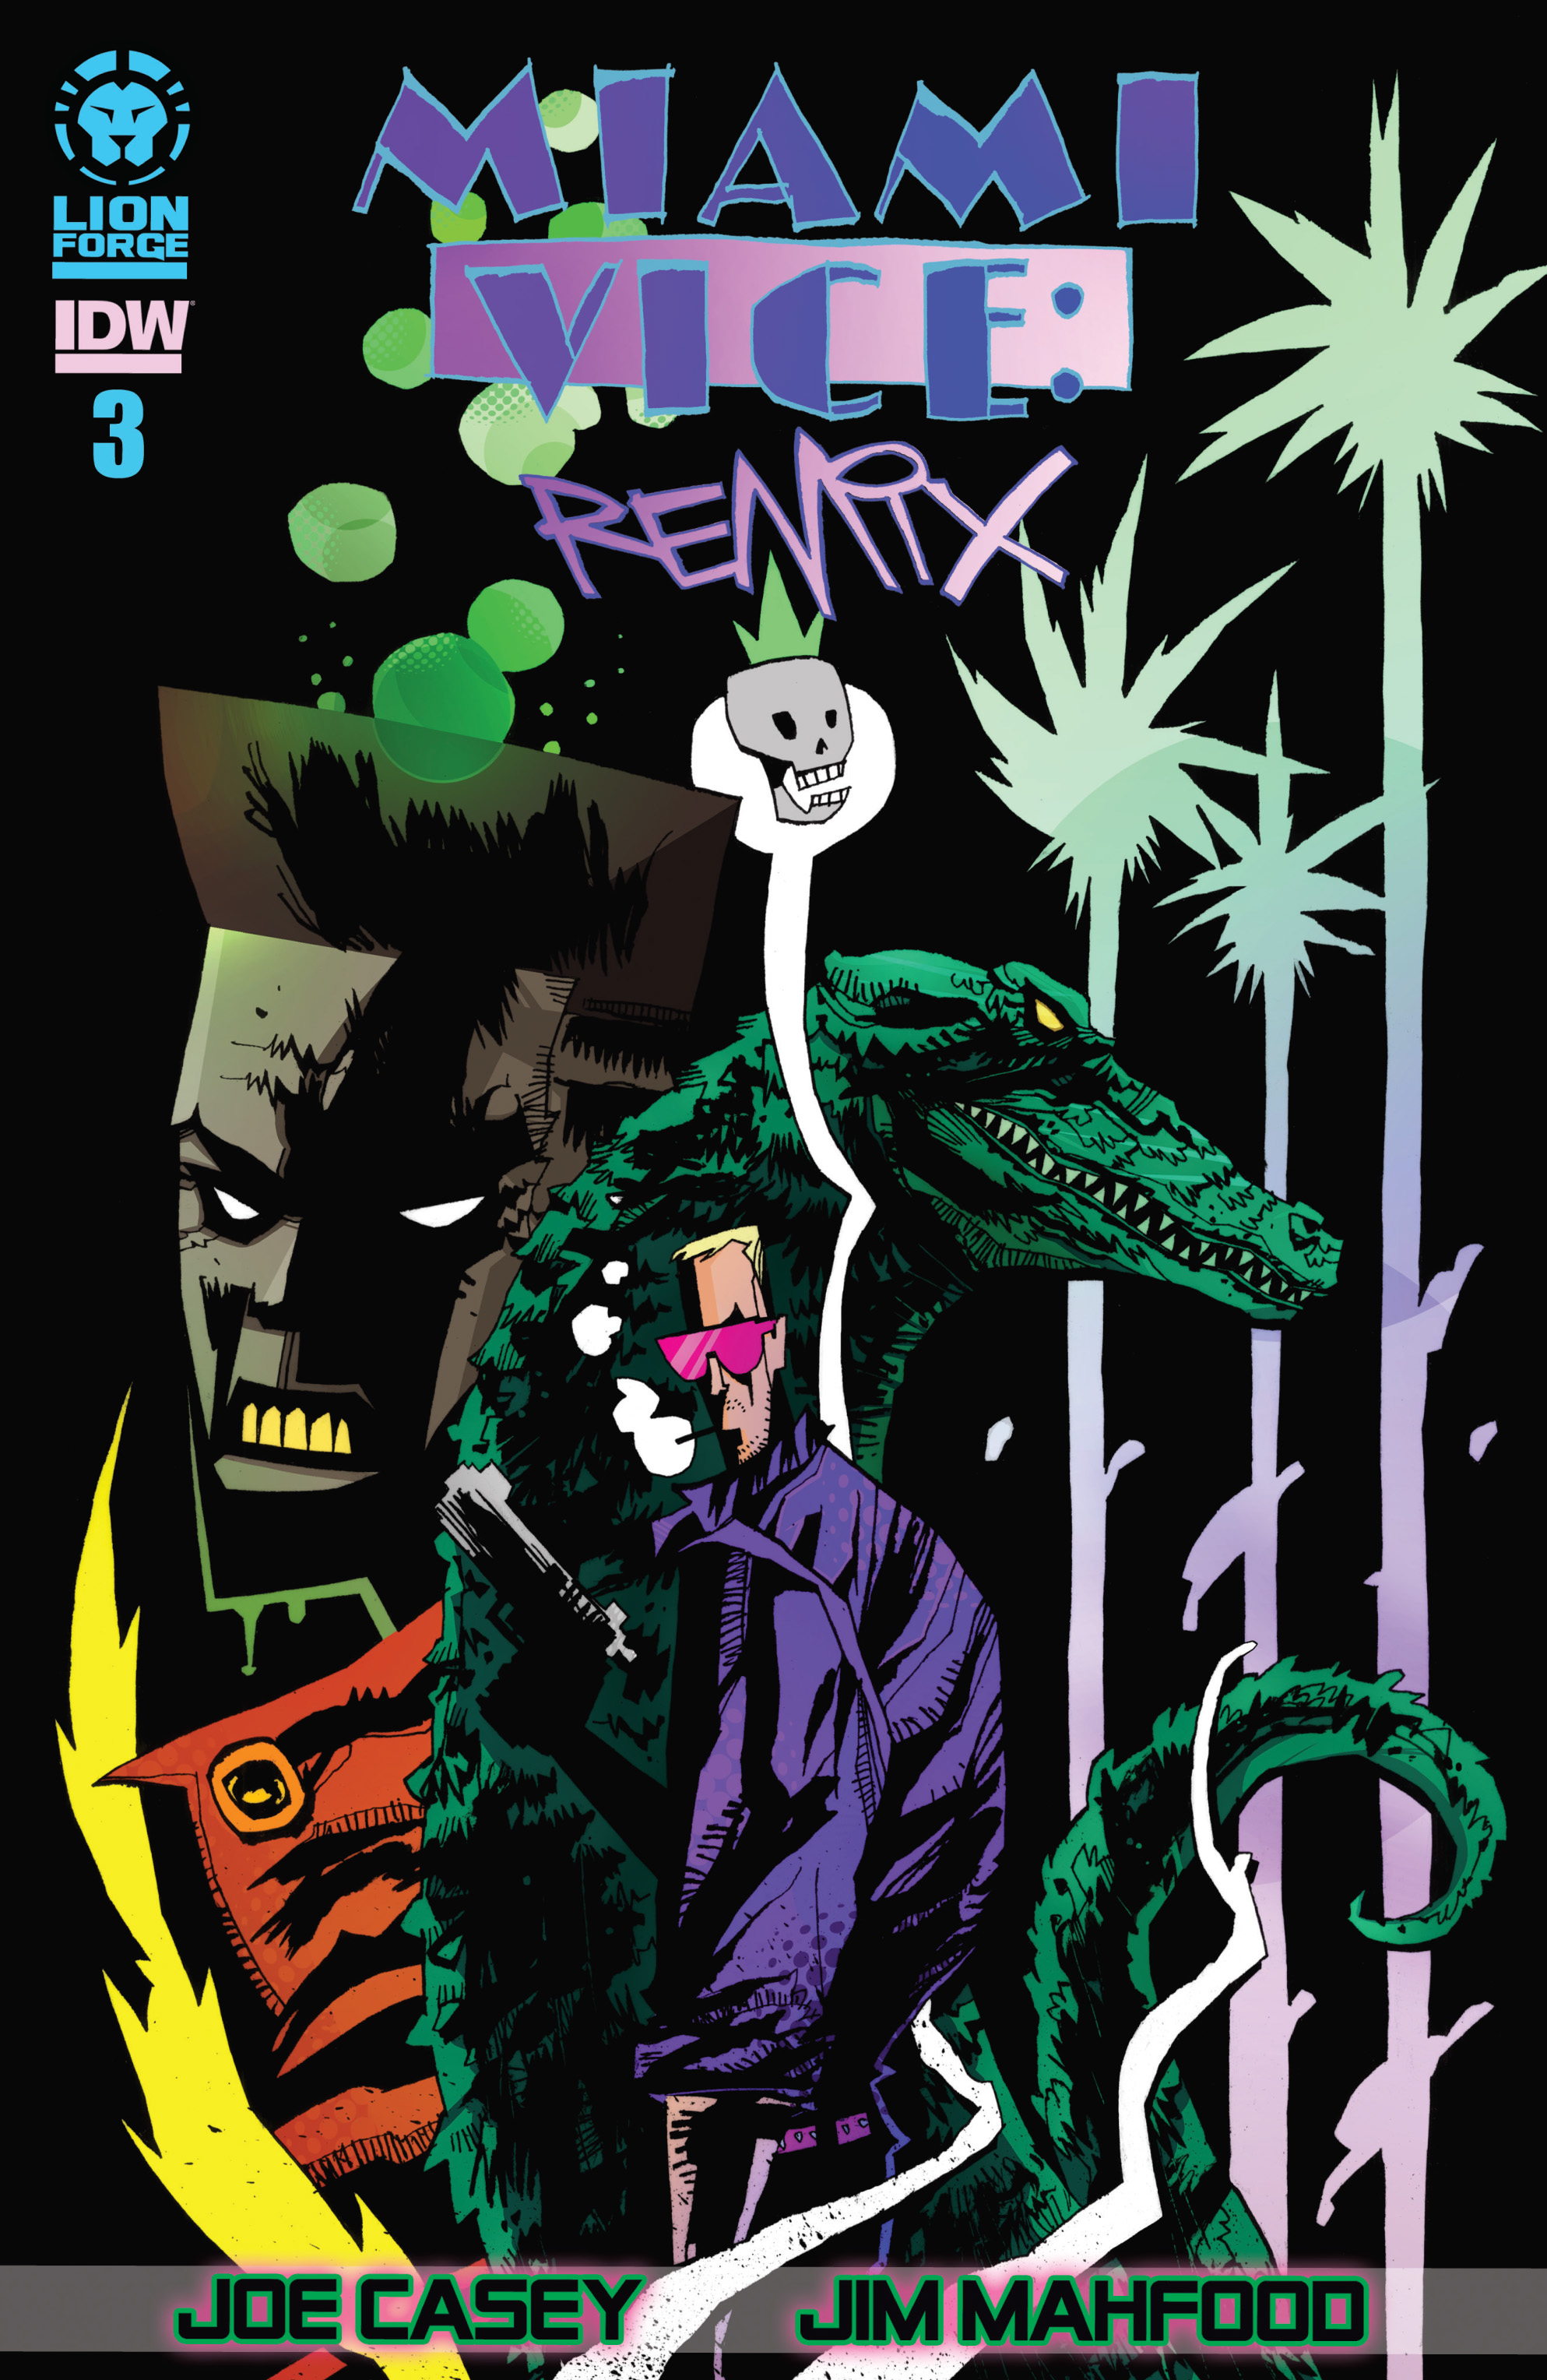 Read online Miami Vice Remix comic -  Issue #3 - 1